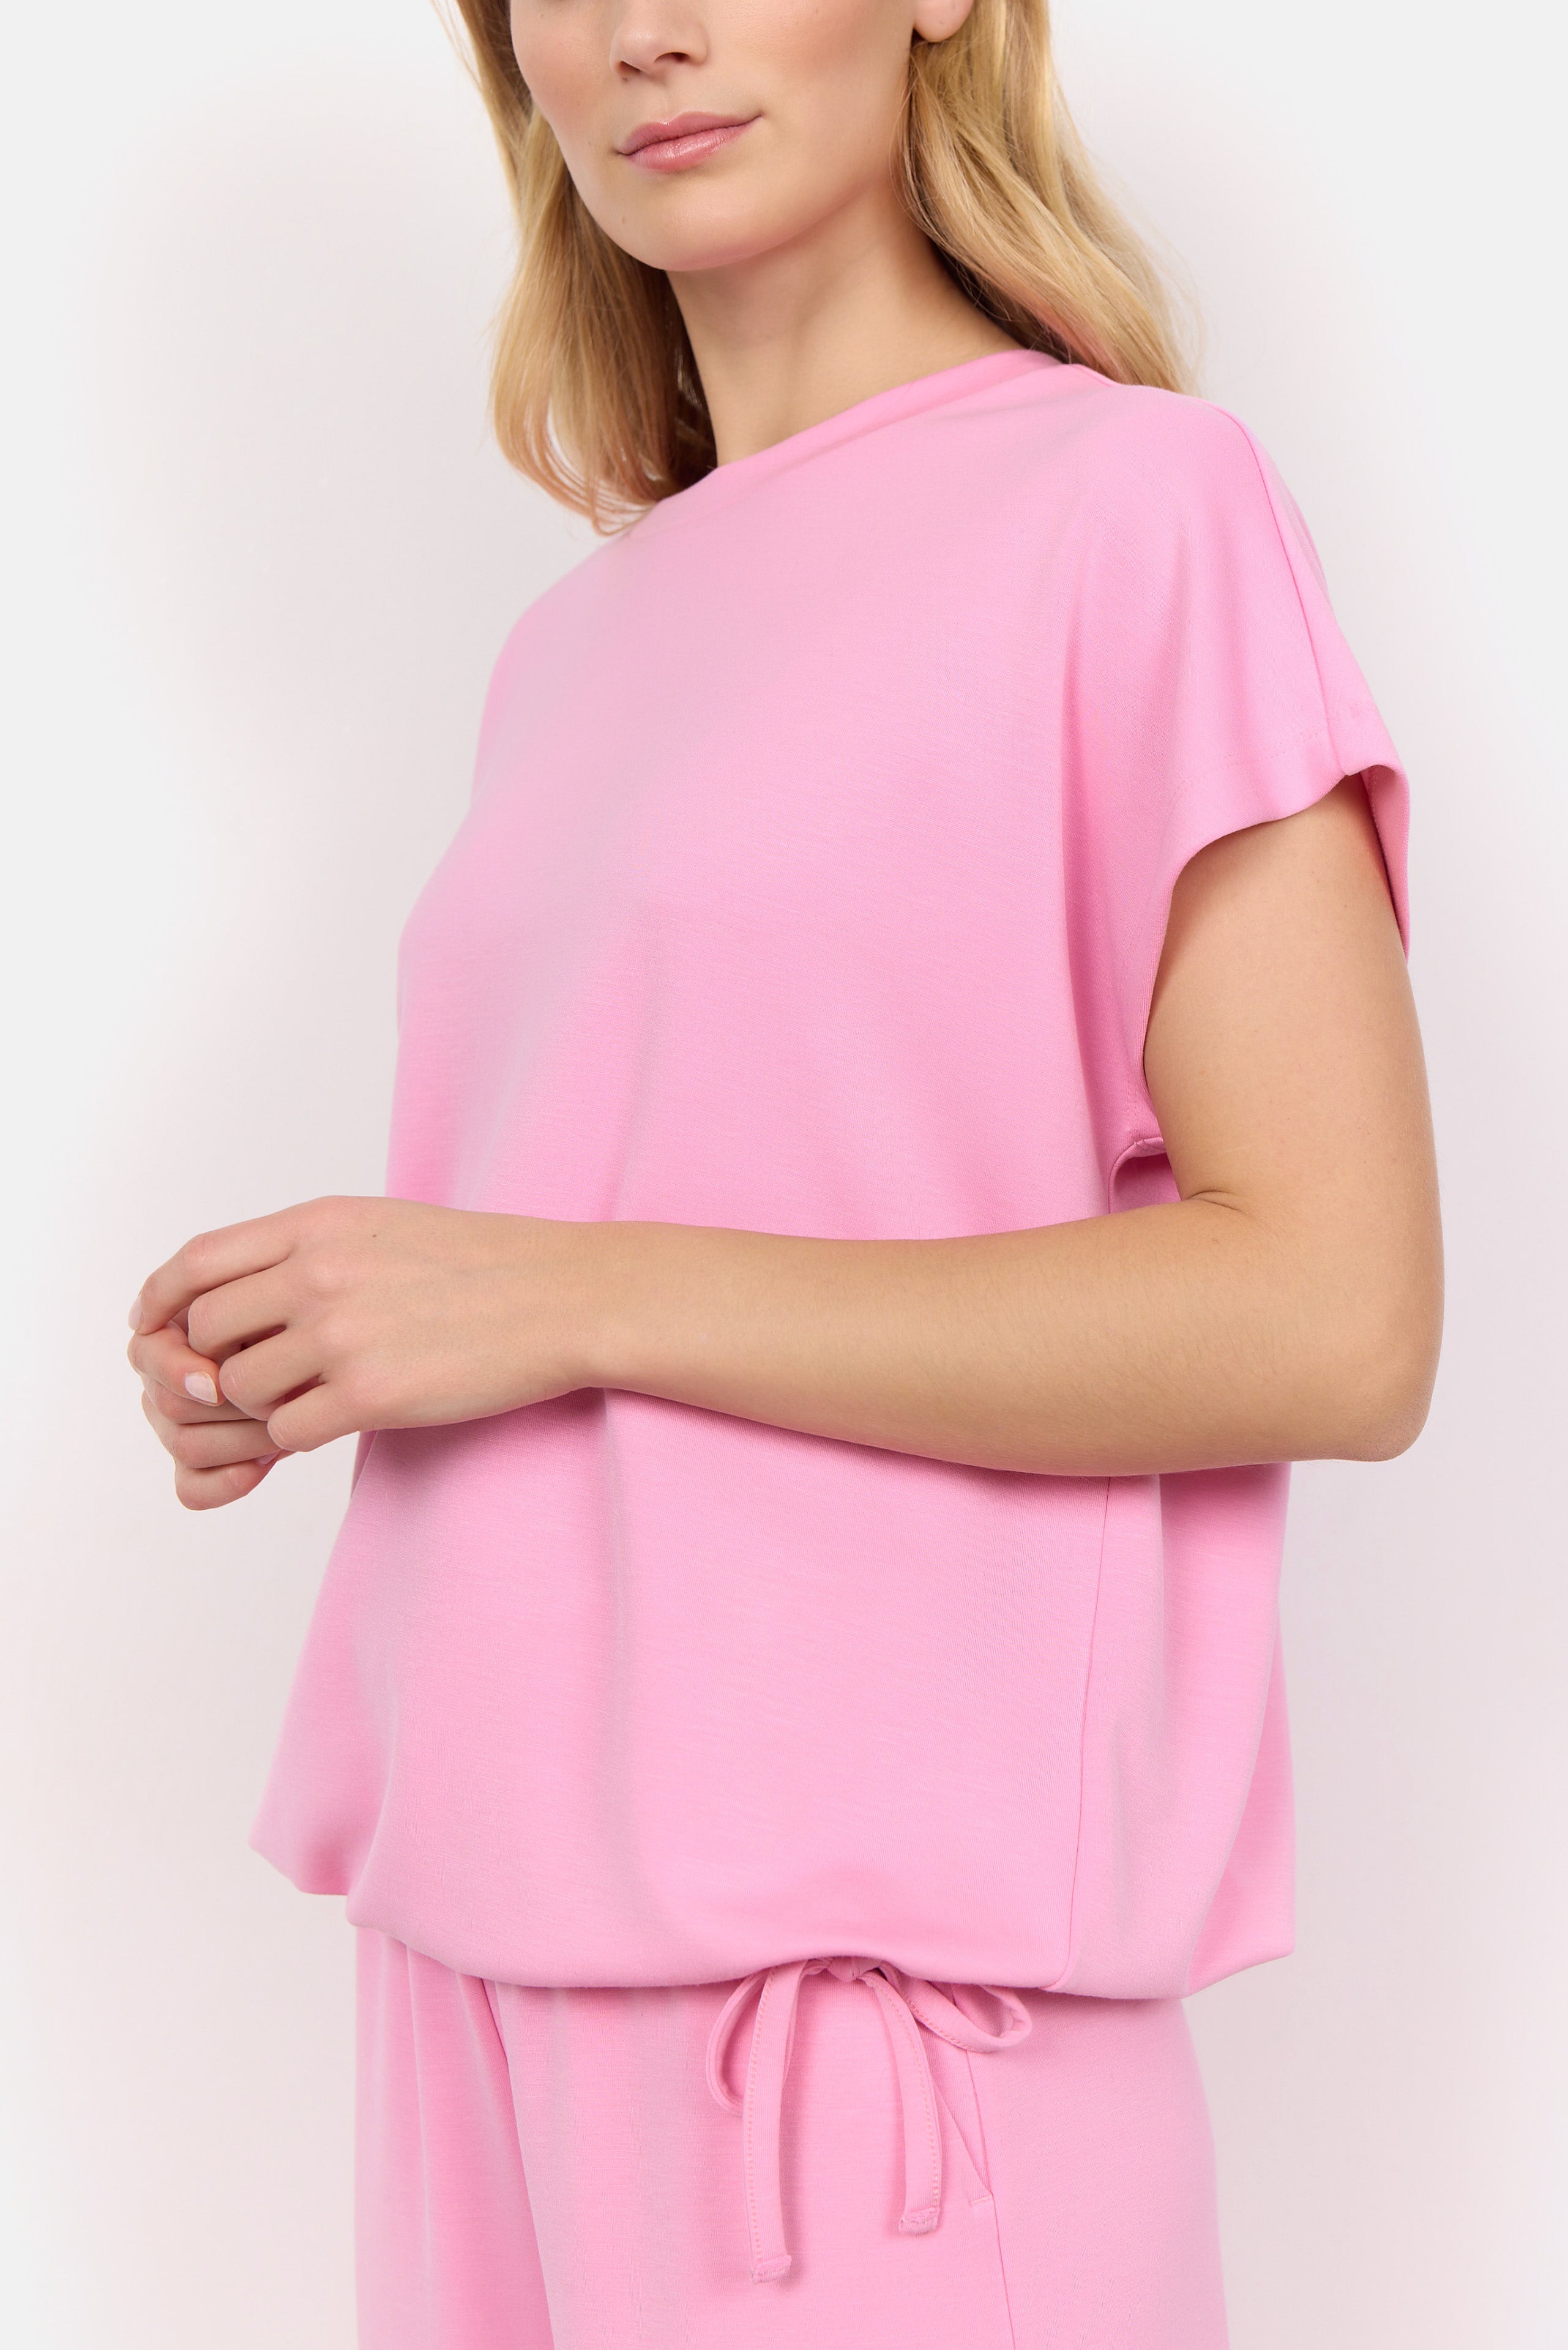 Banu 169 Pink Tie Hem T-Shirt - 26475